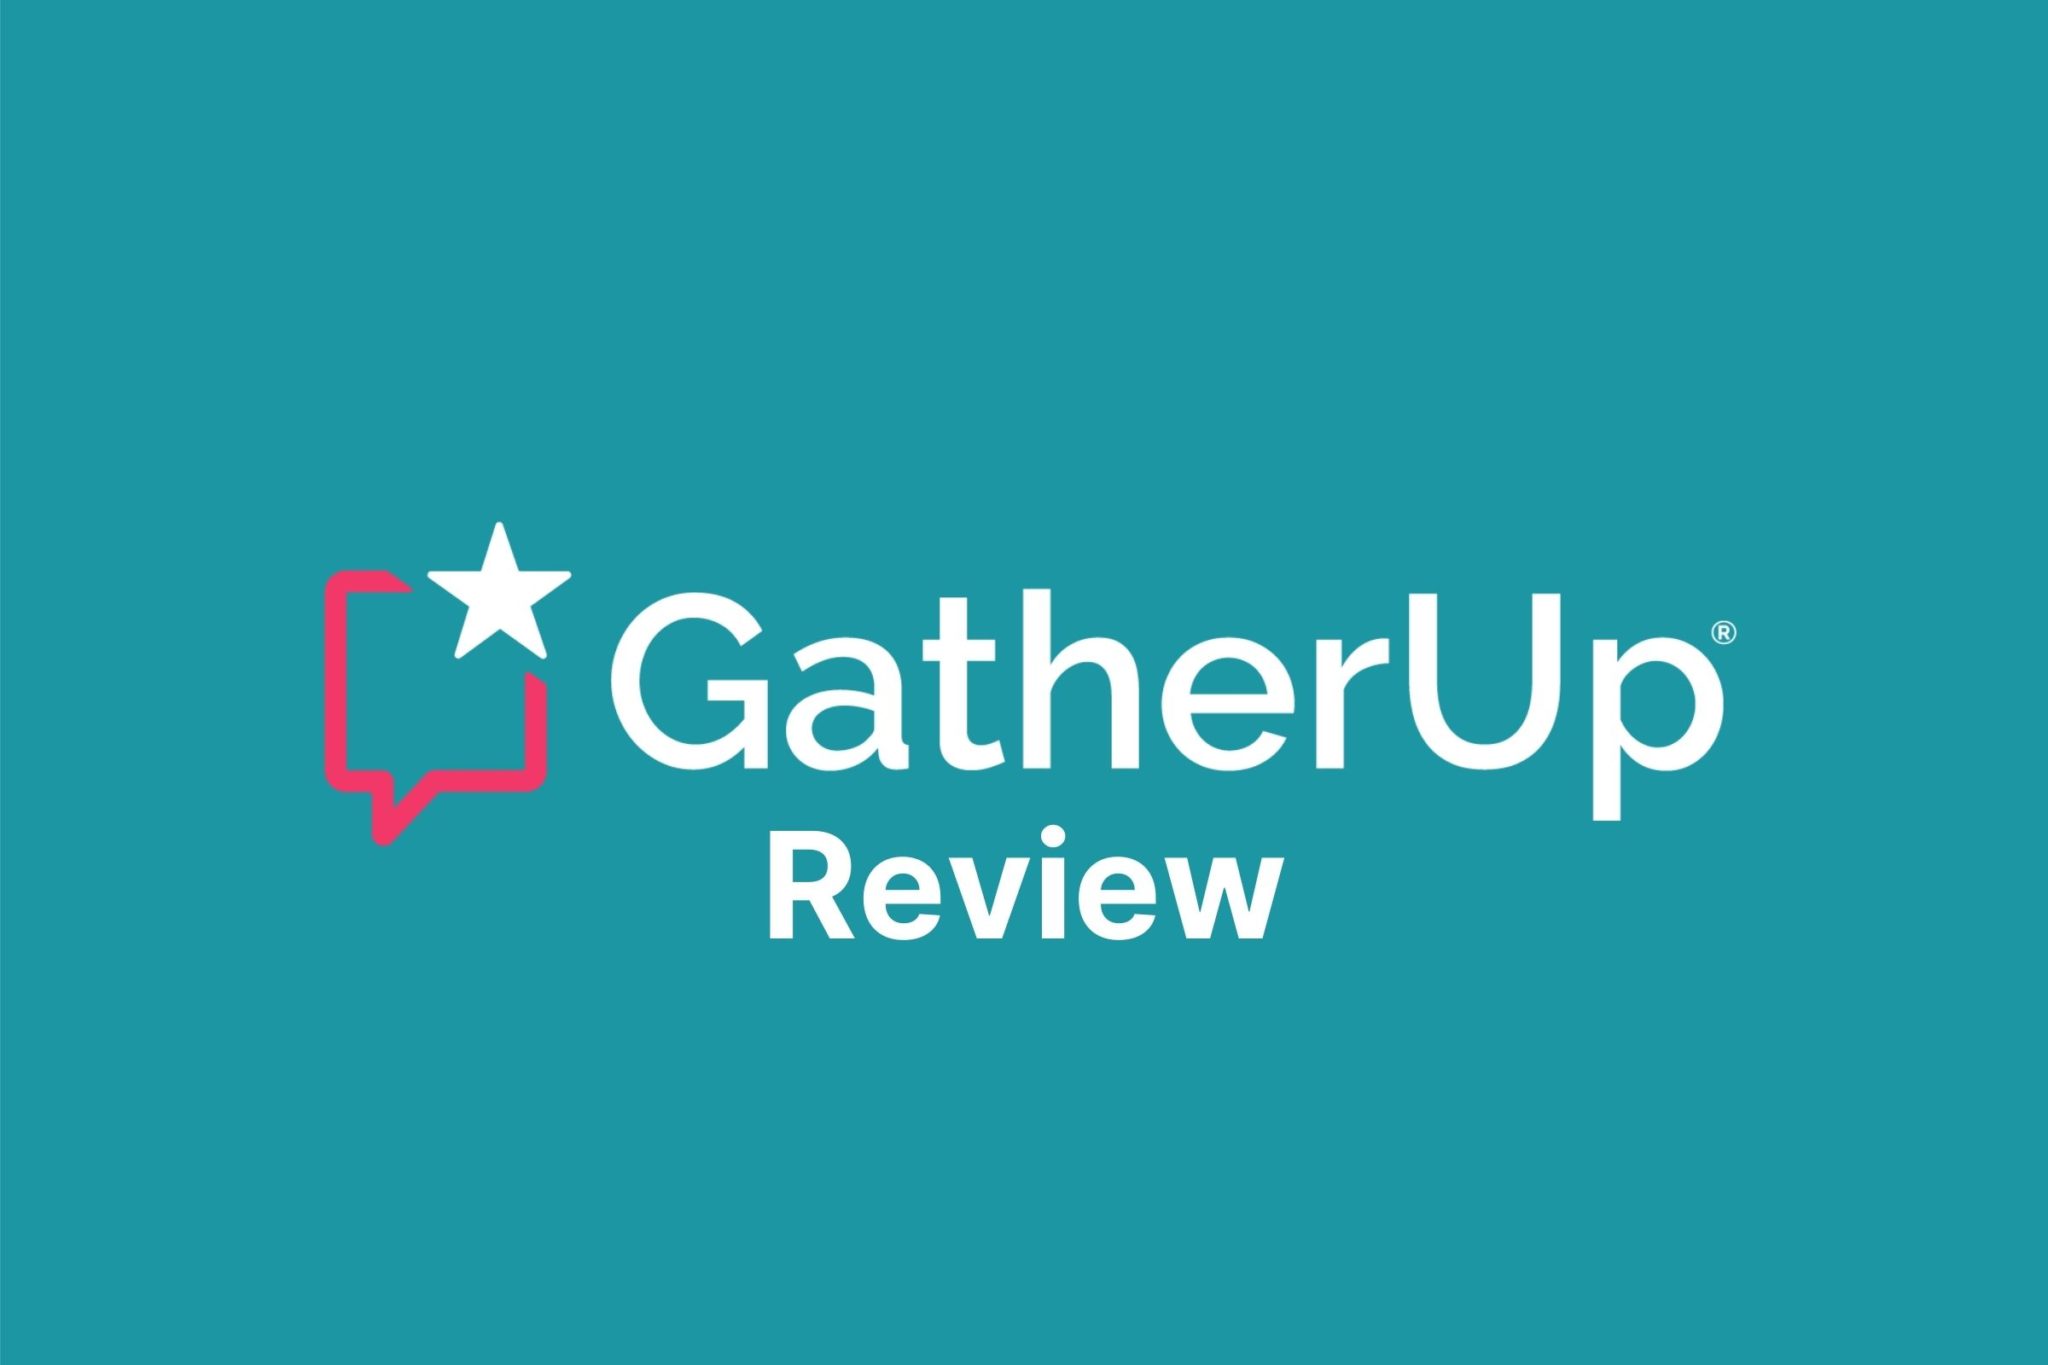 Reviews of GatherUp